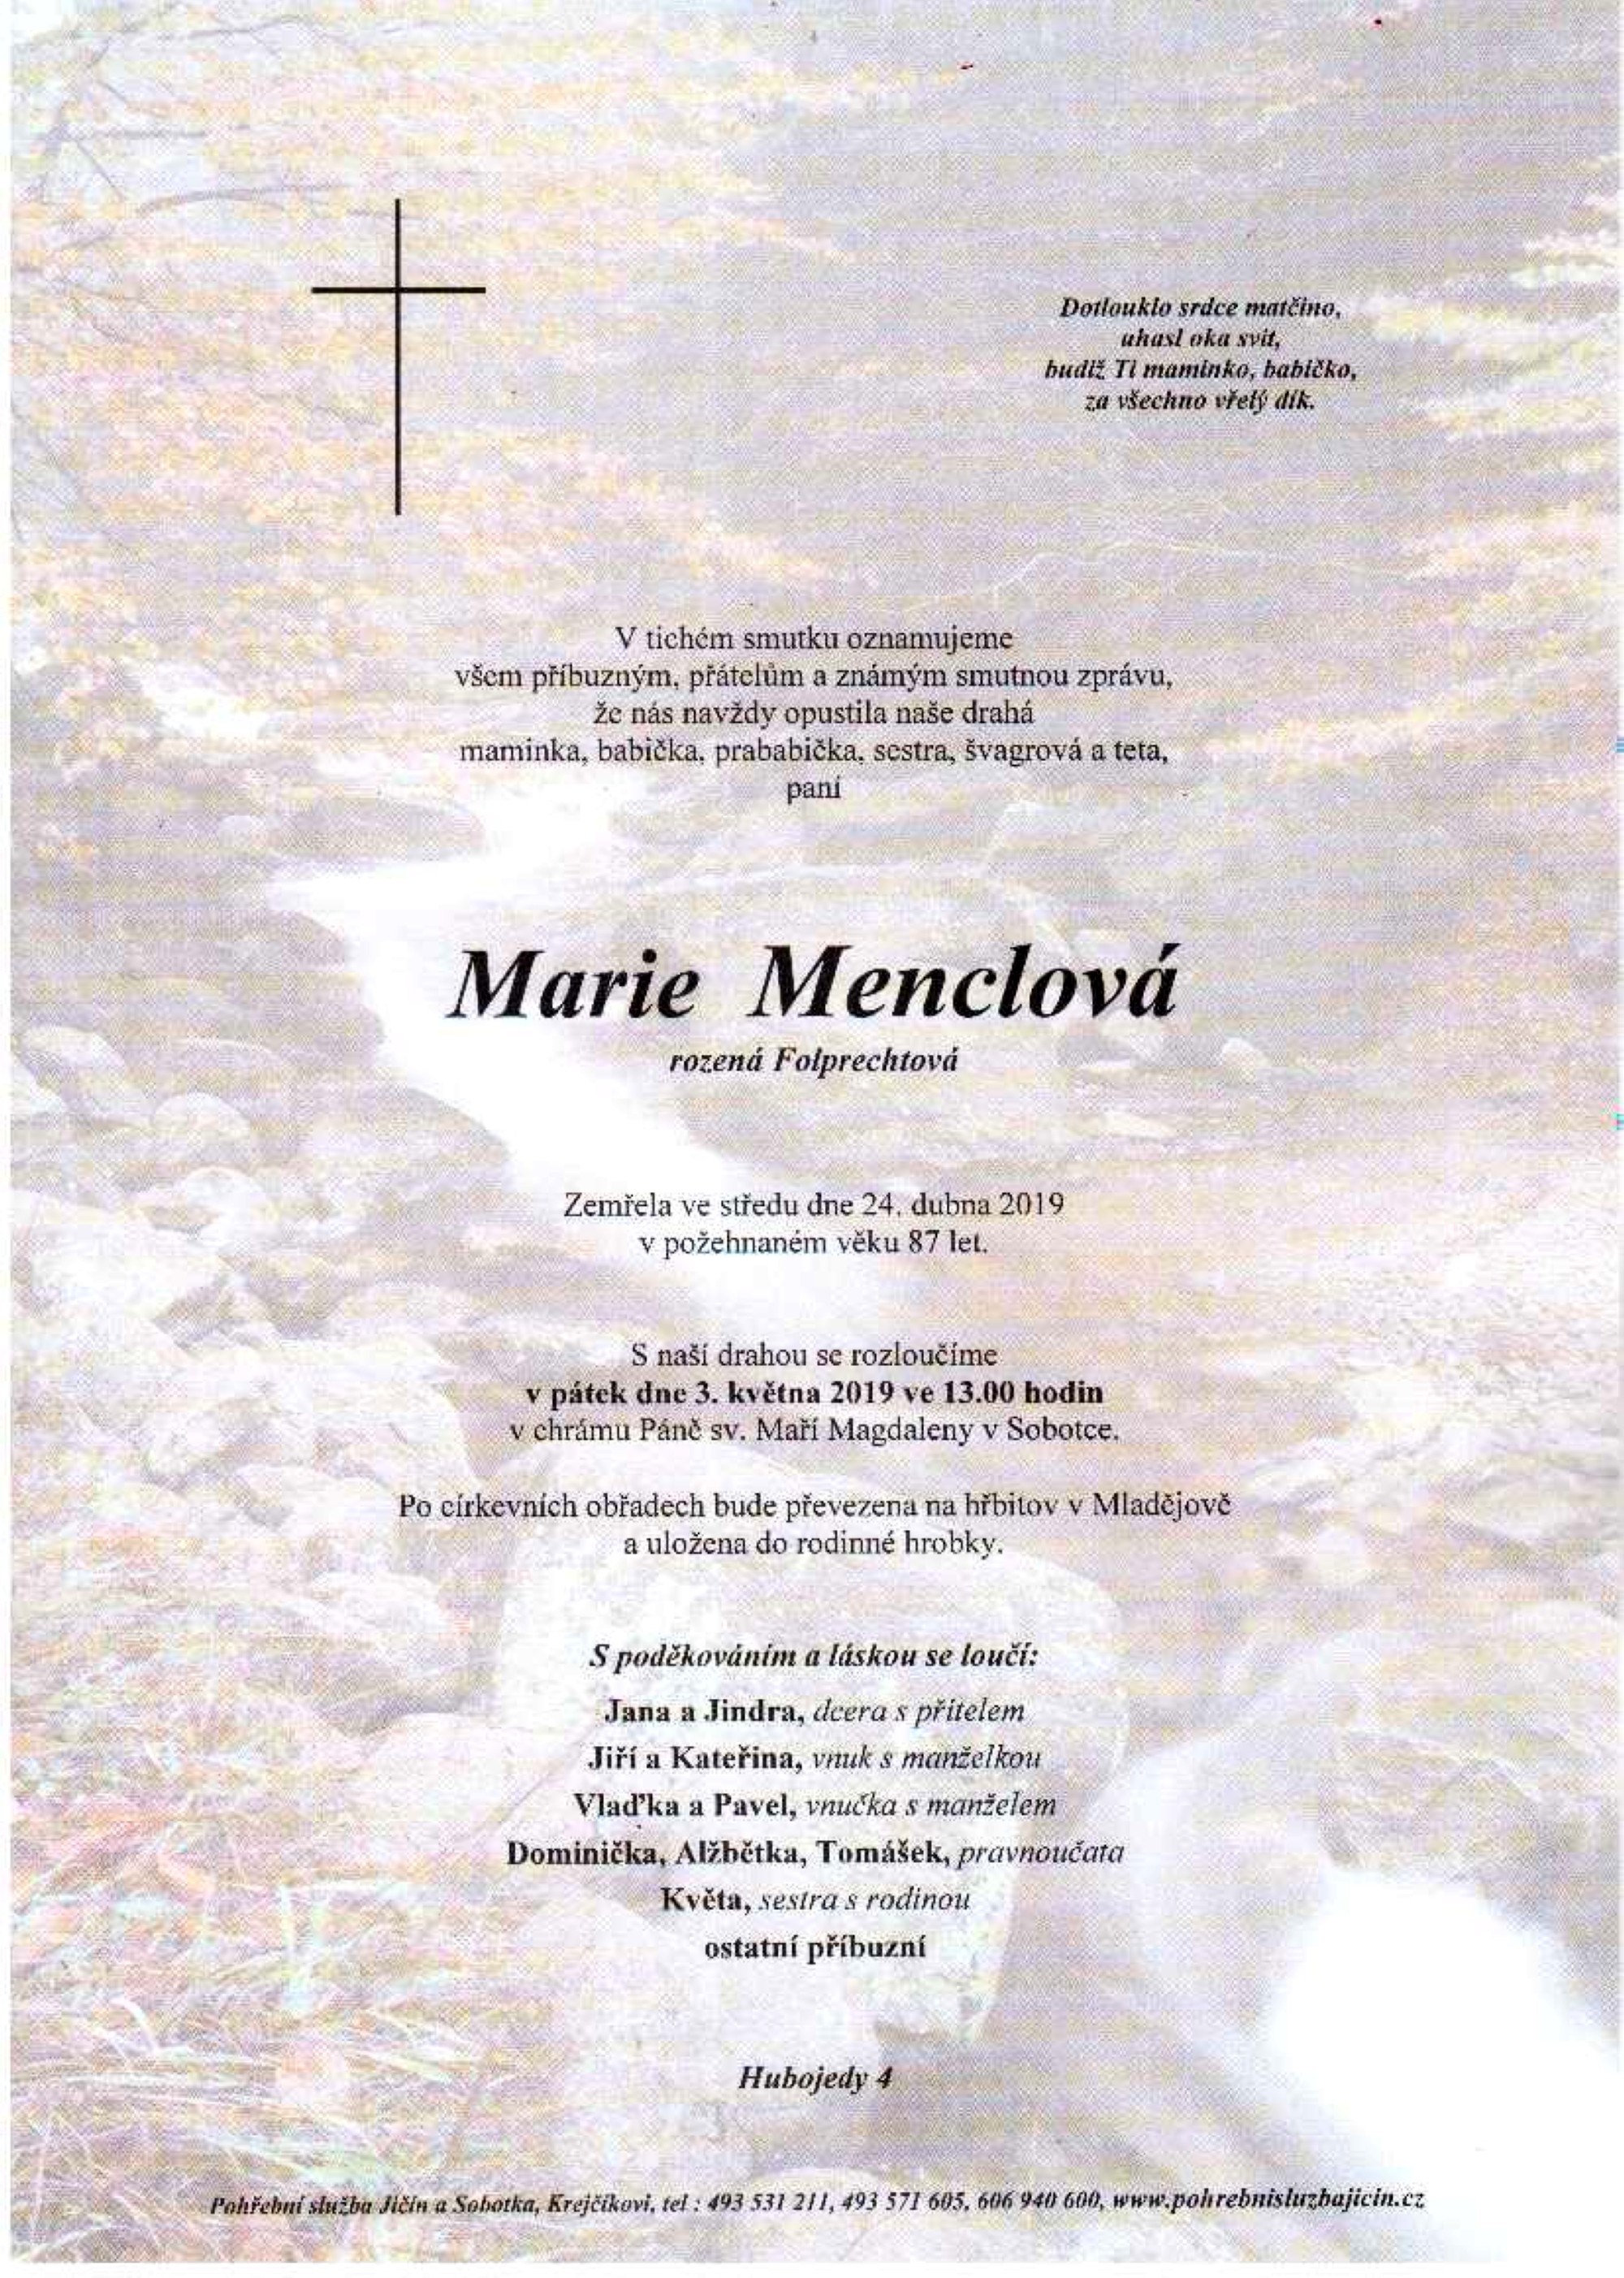 Marie Menclová